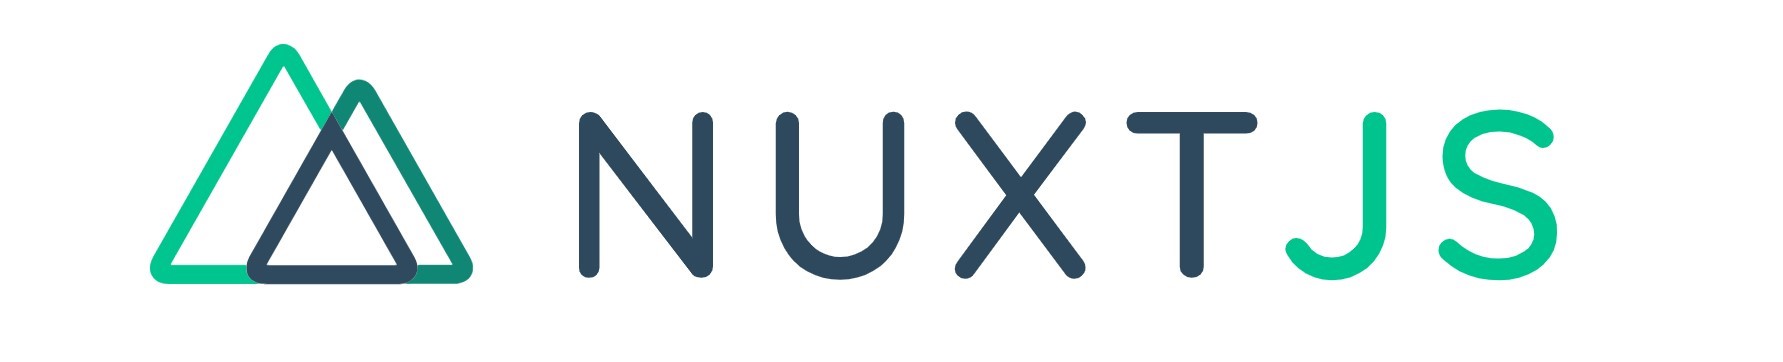  nuxt.jsのロゴ